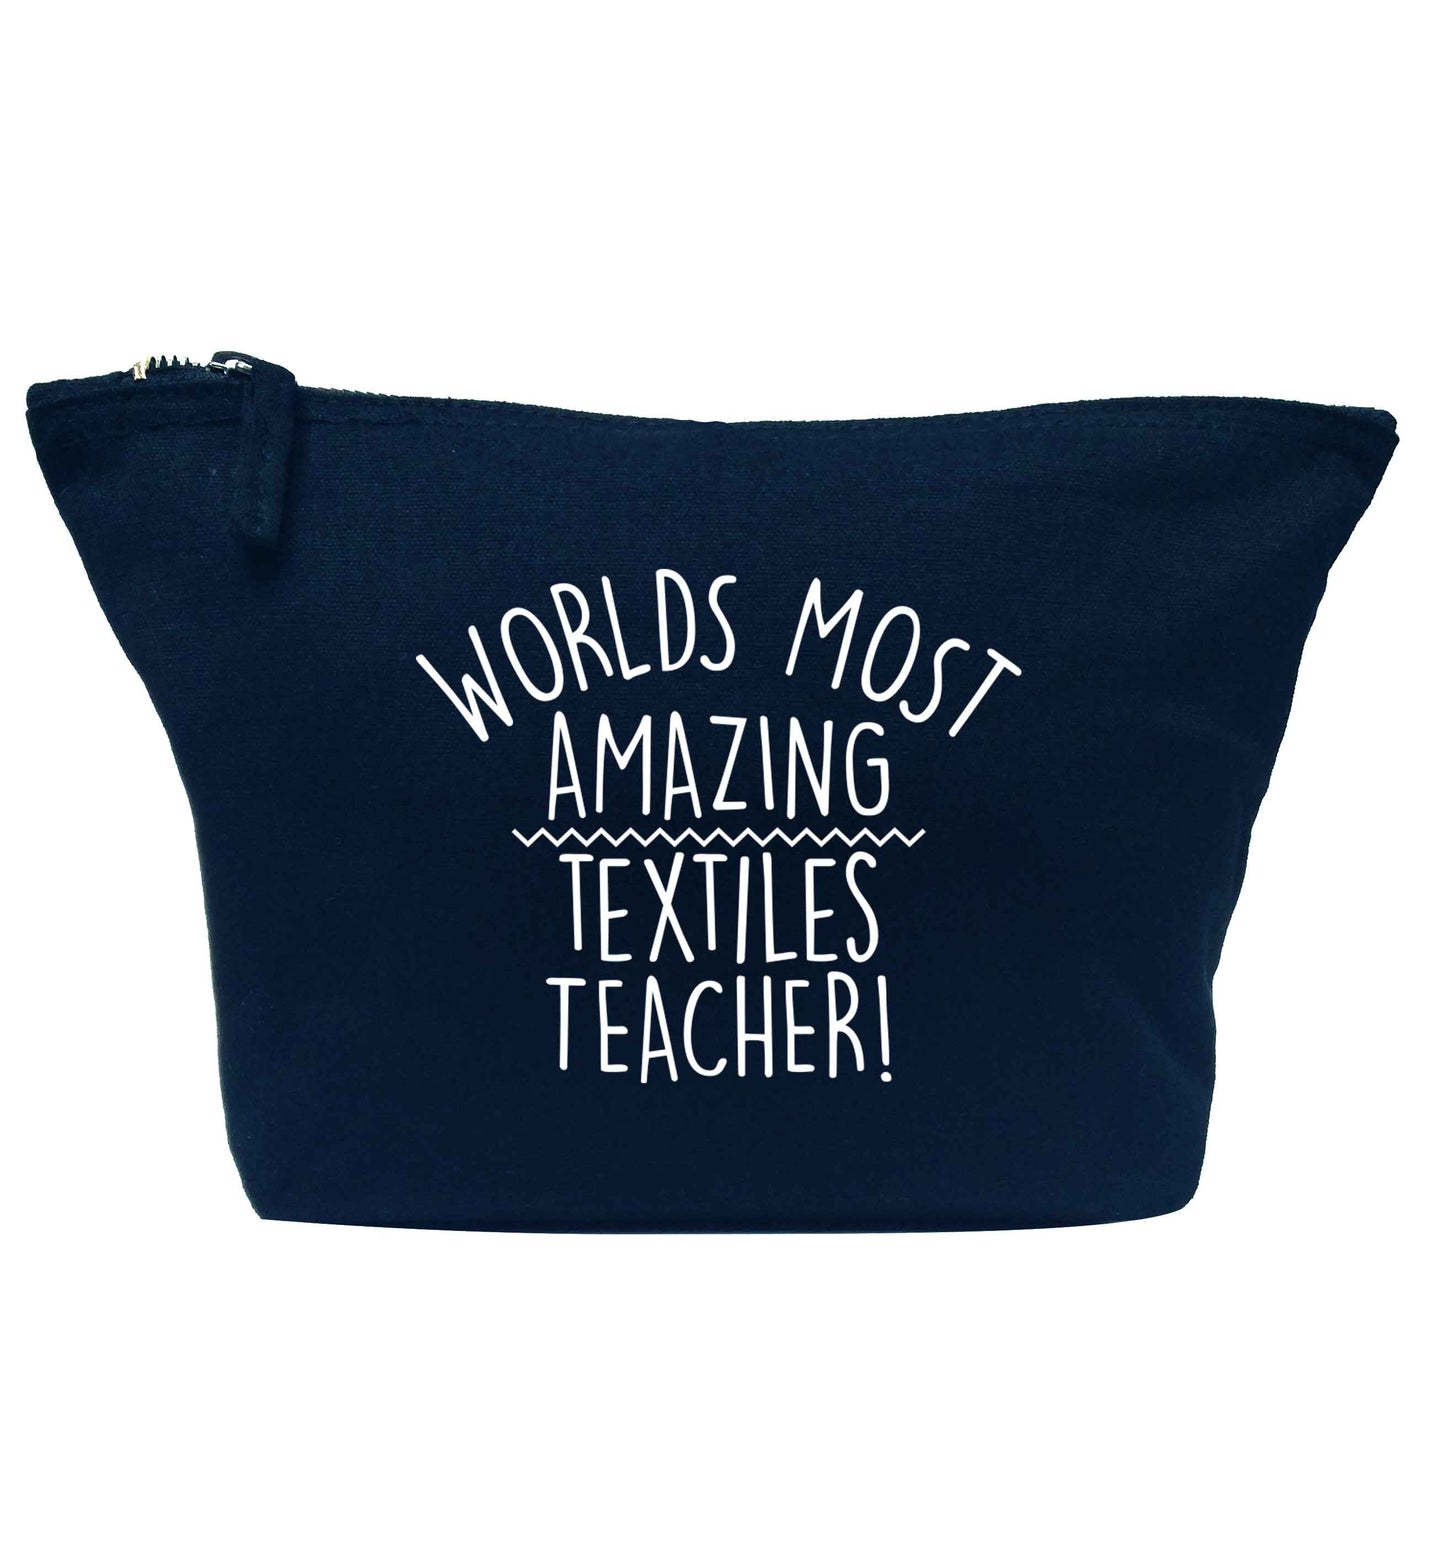 Worlds most amazing textiles teacher navy makeup bag